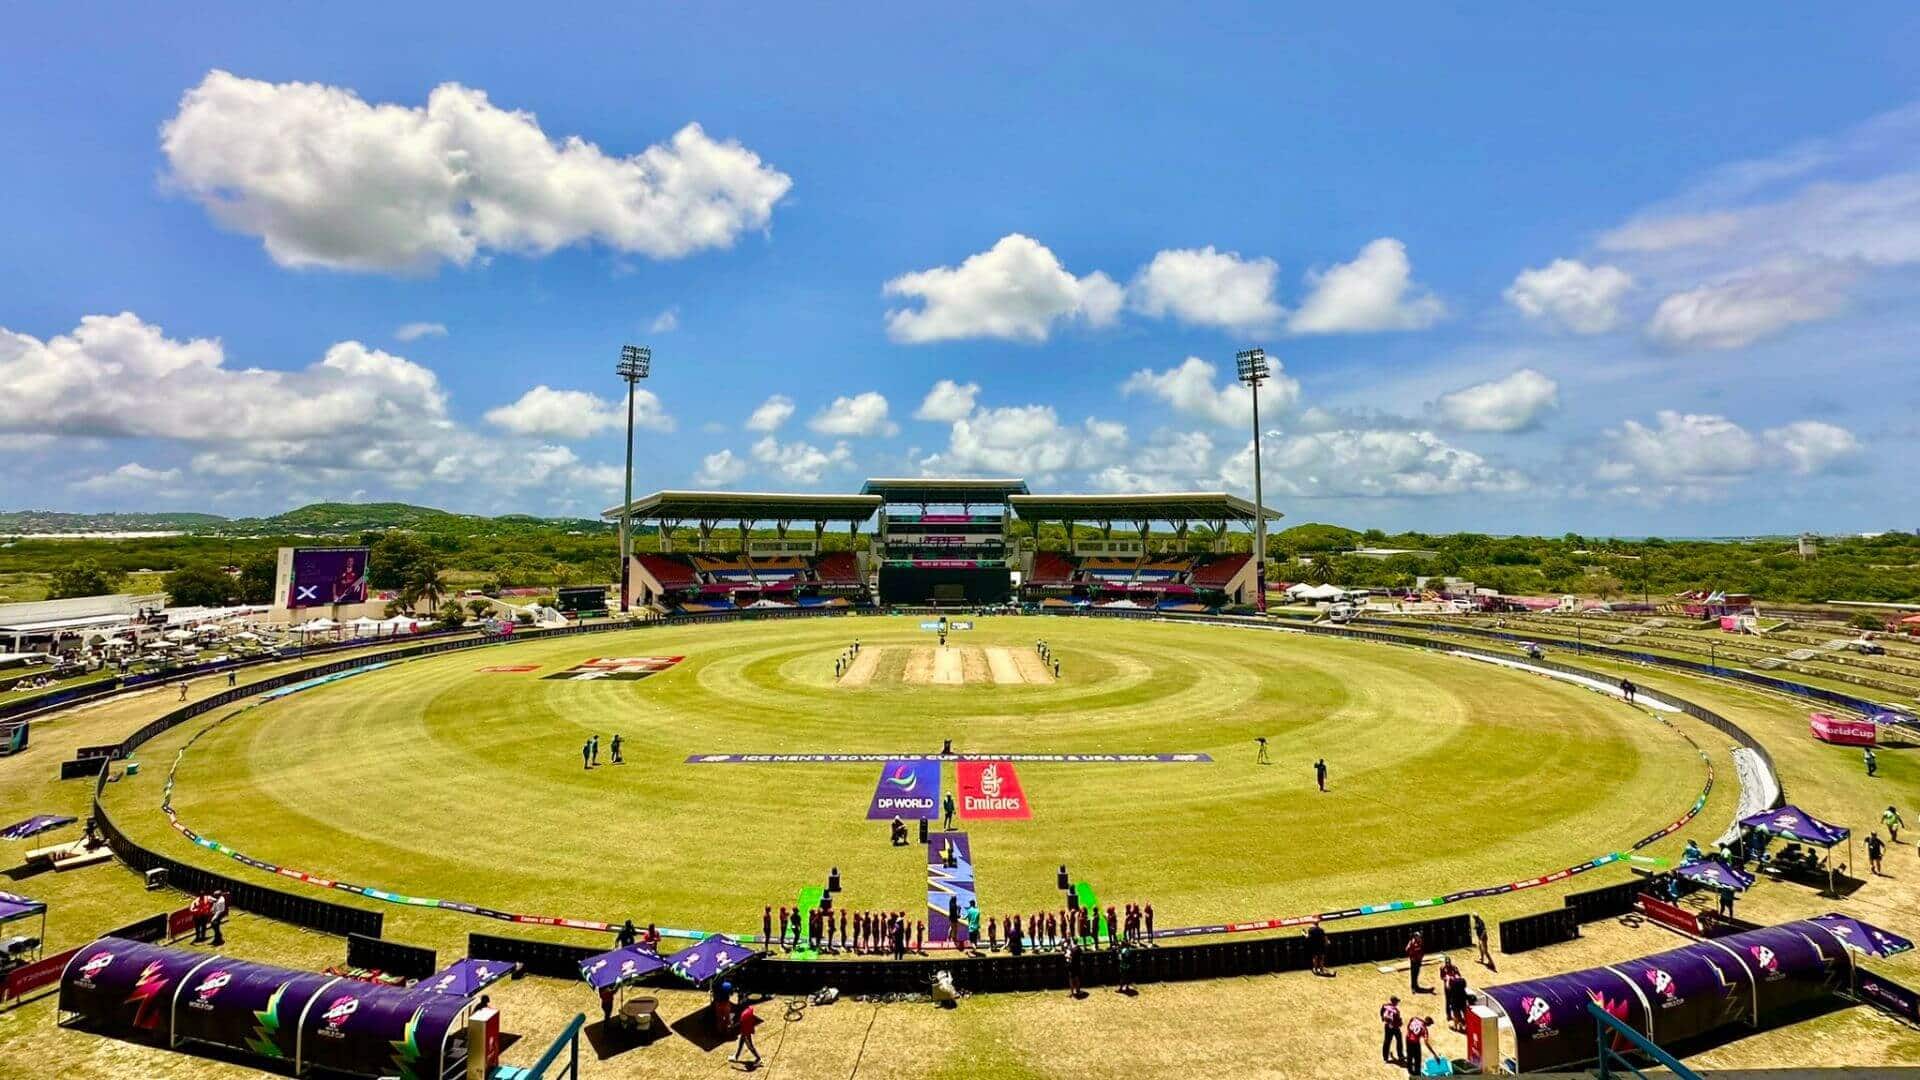 Sir Vivian Richards Stadium Antigua Pitch Report For ENG vs NAM T20 World Cup Match